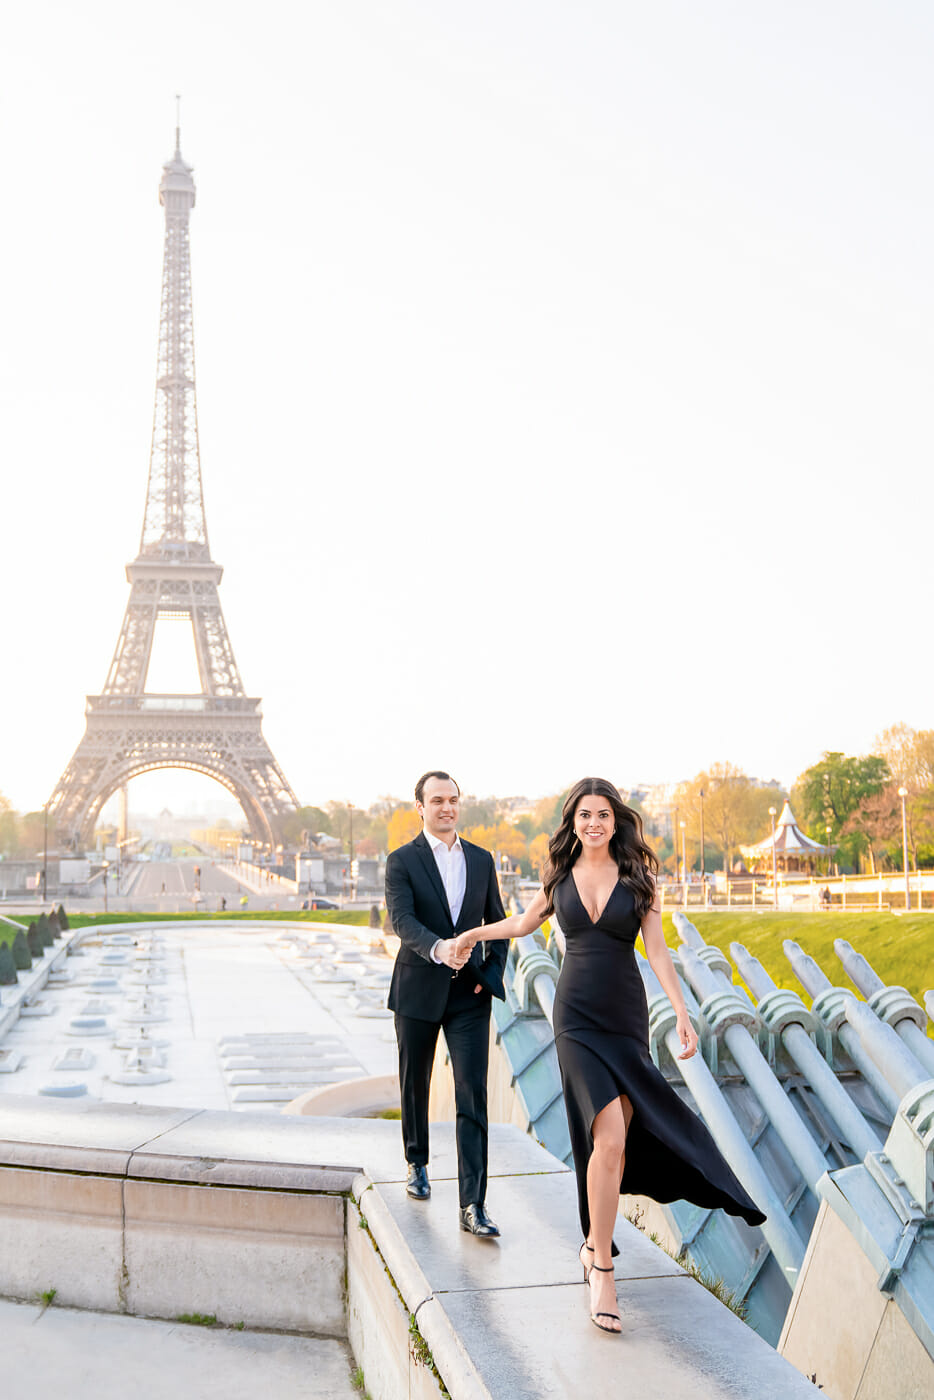 Beautiful Eiffel Tower couple photos